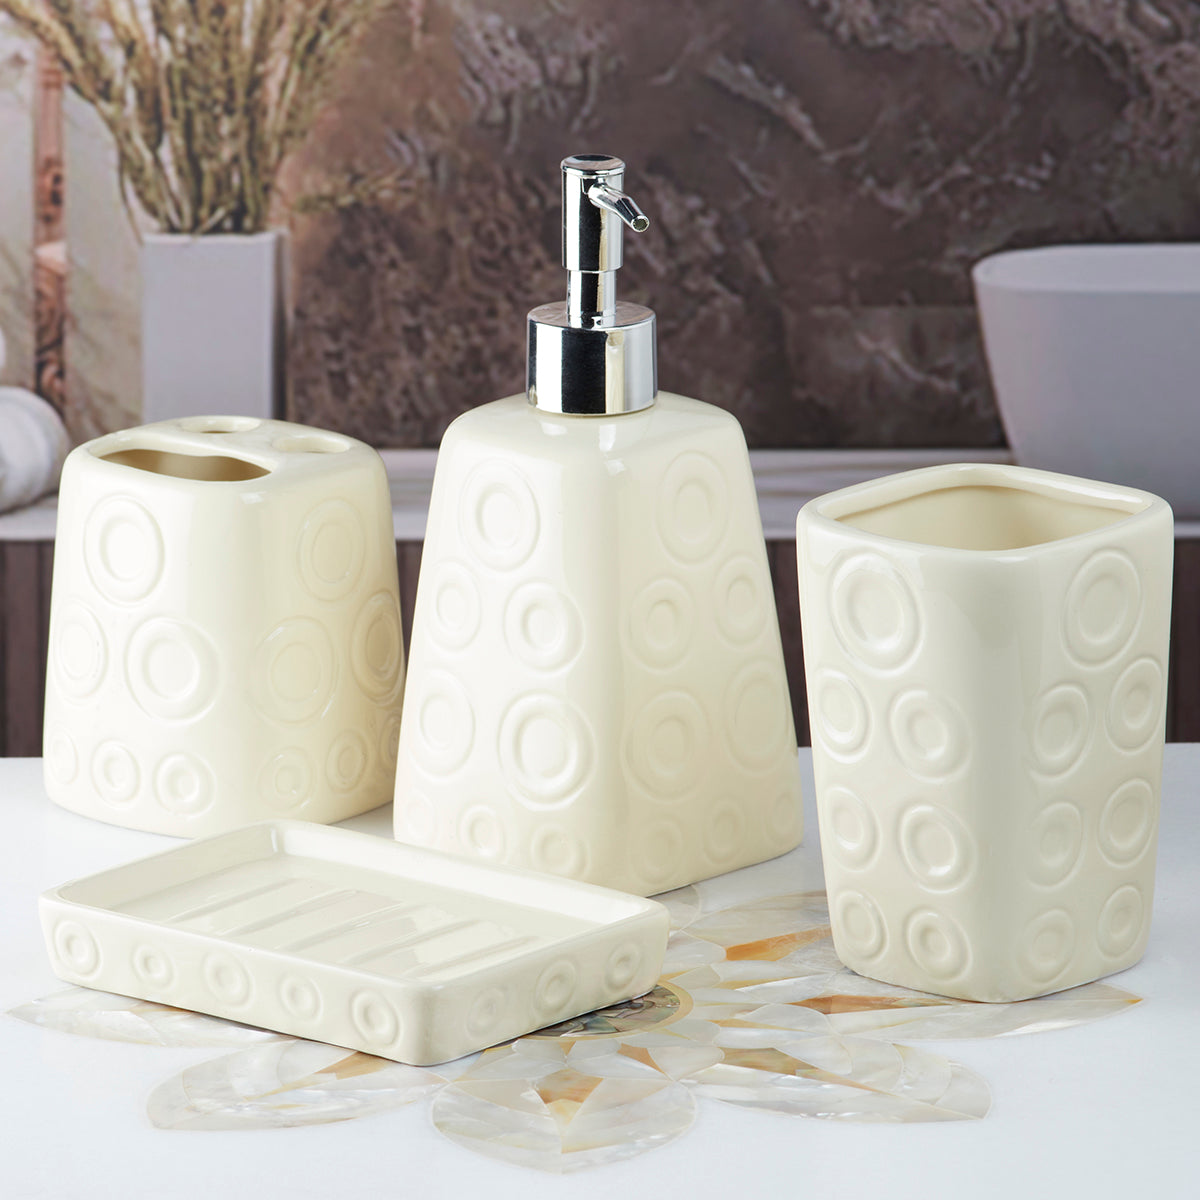 Ceramic Bathroom Accessories Set of 4 Bath Set with Soap Dispenser (8160)